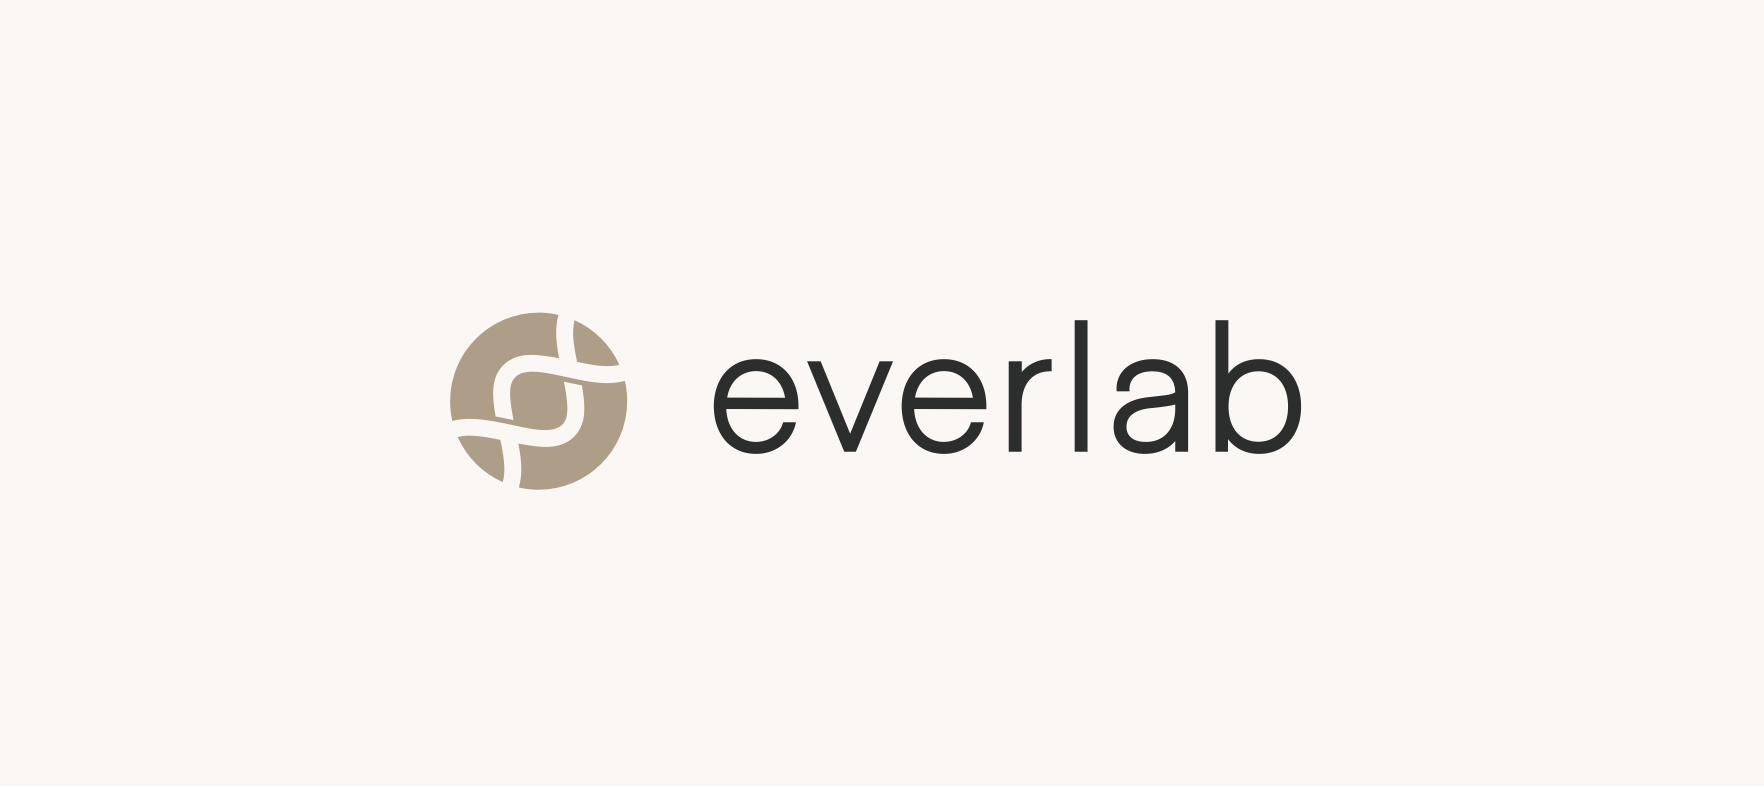 Everlab